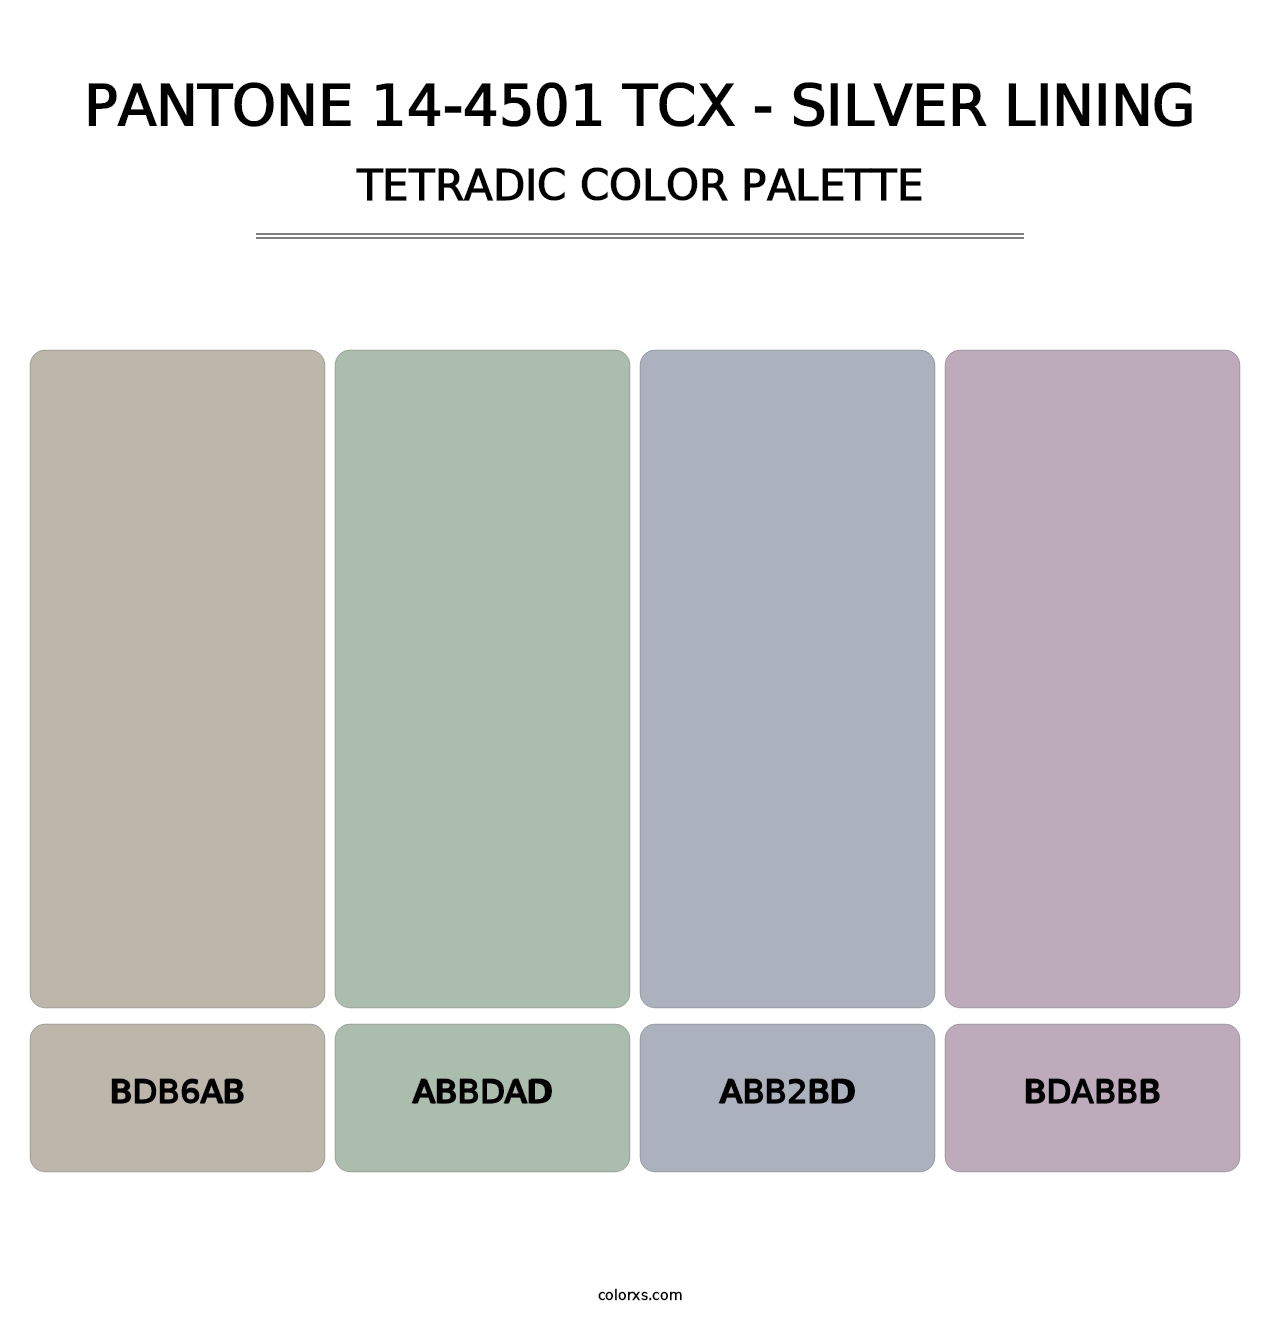 PANTONE 14-4501 TCX - Silver Lining - Tetradic Color Palette